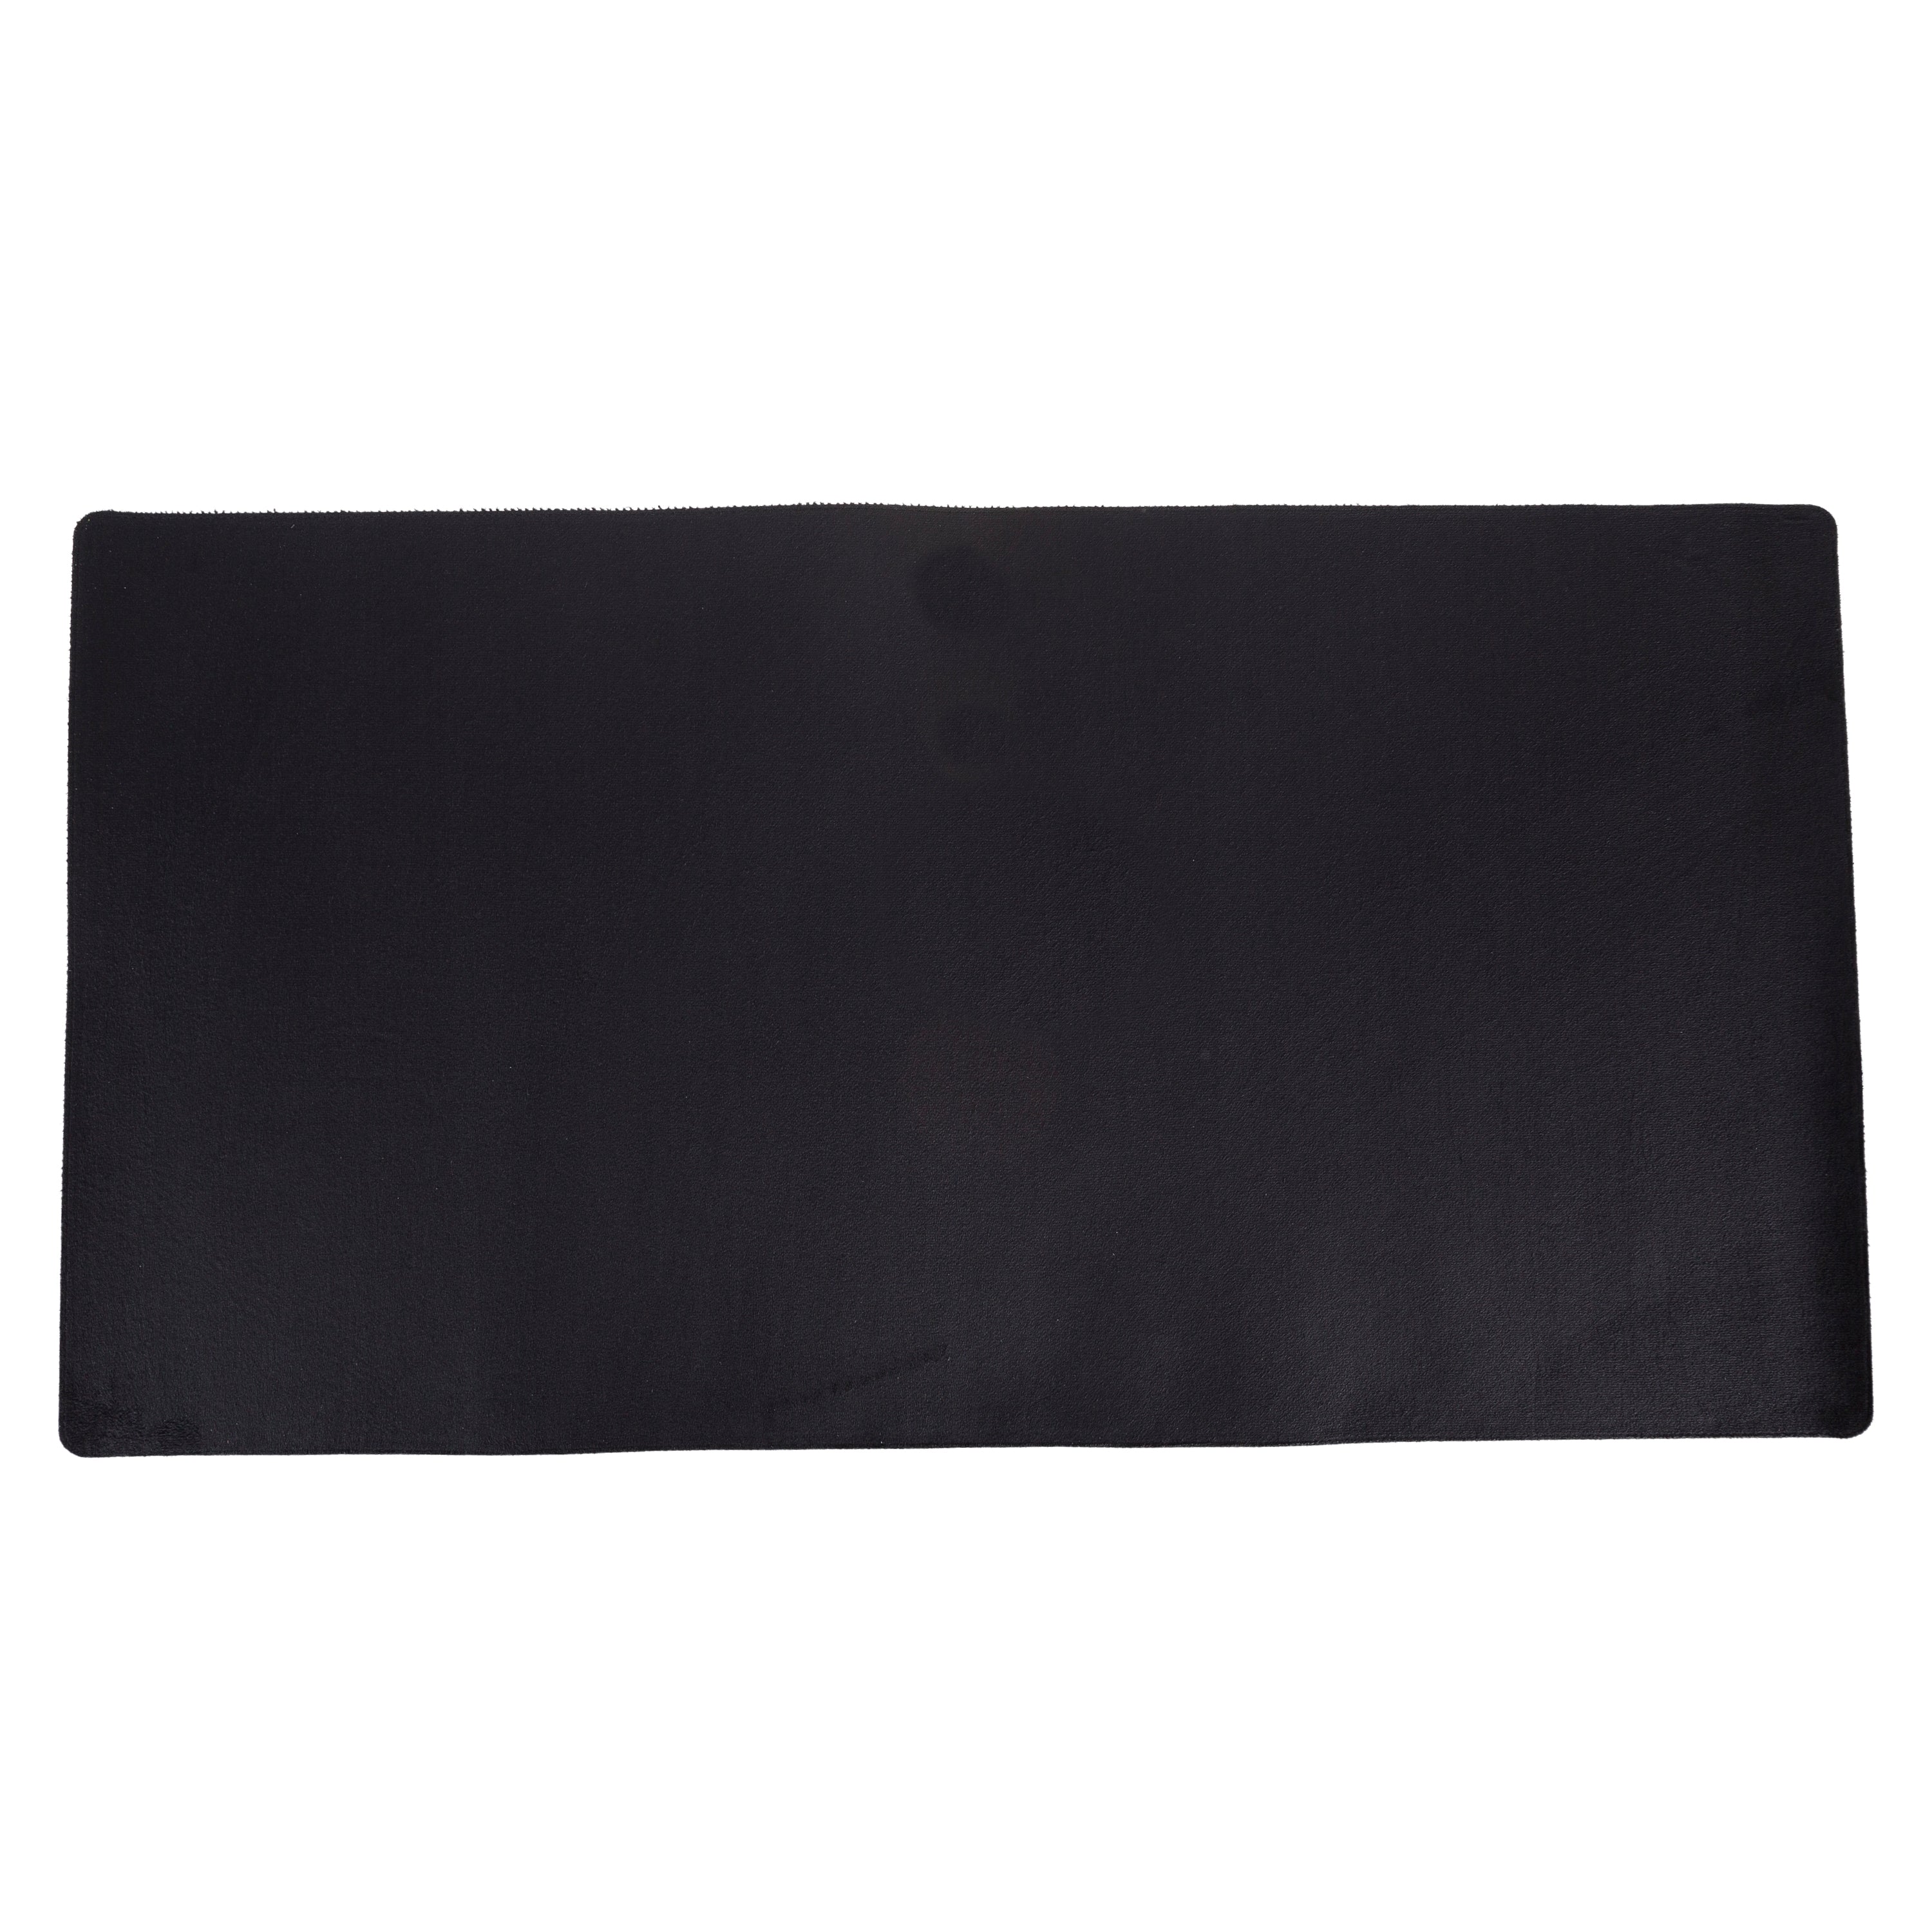 DelfiCase Genuine Matte Black Leather Deskmat, Computer Pad, Office Desk Pad 5